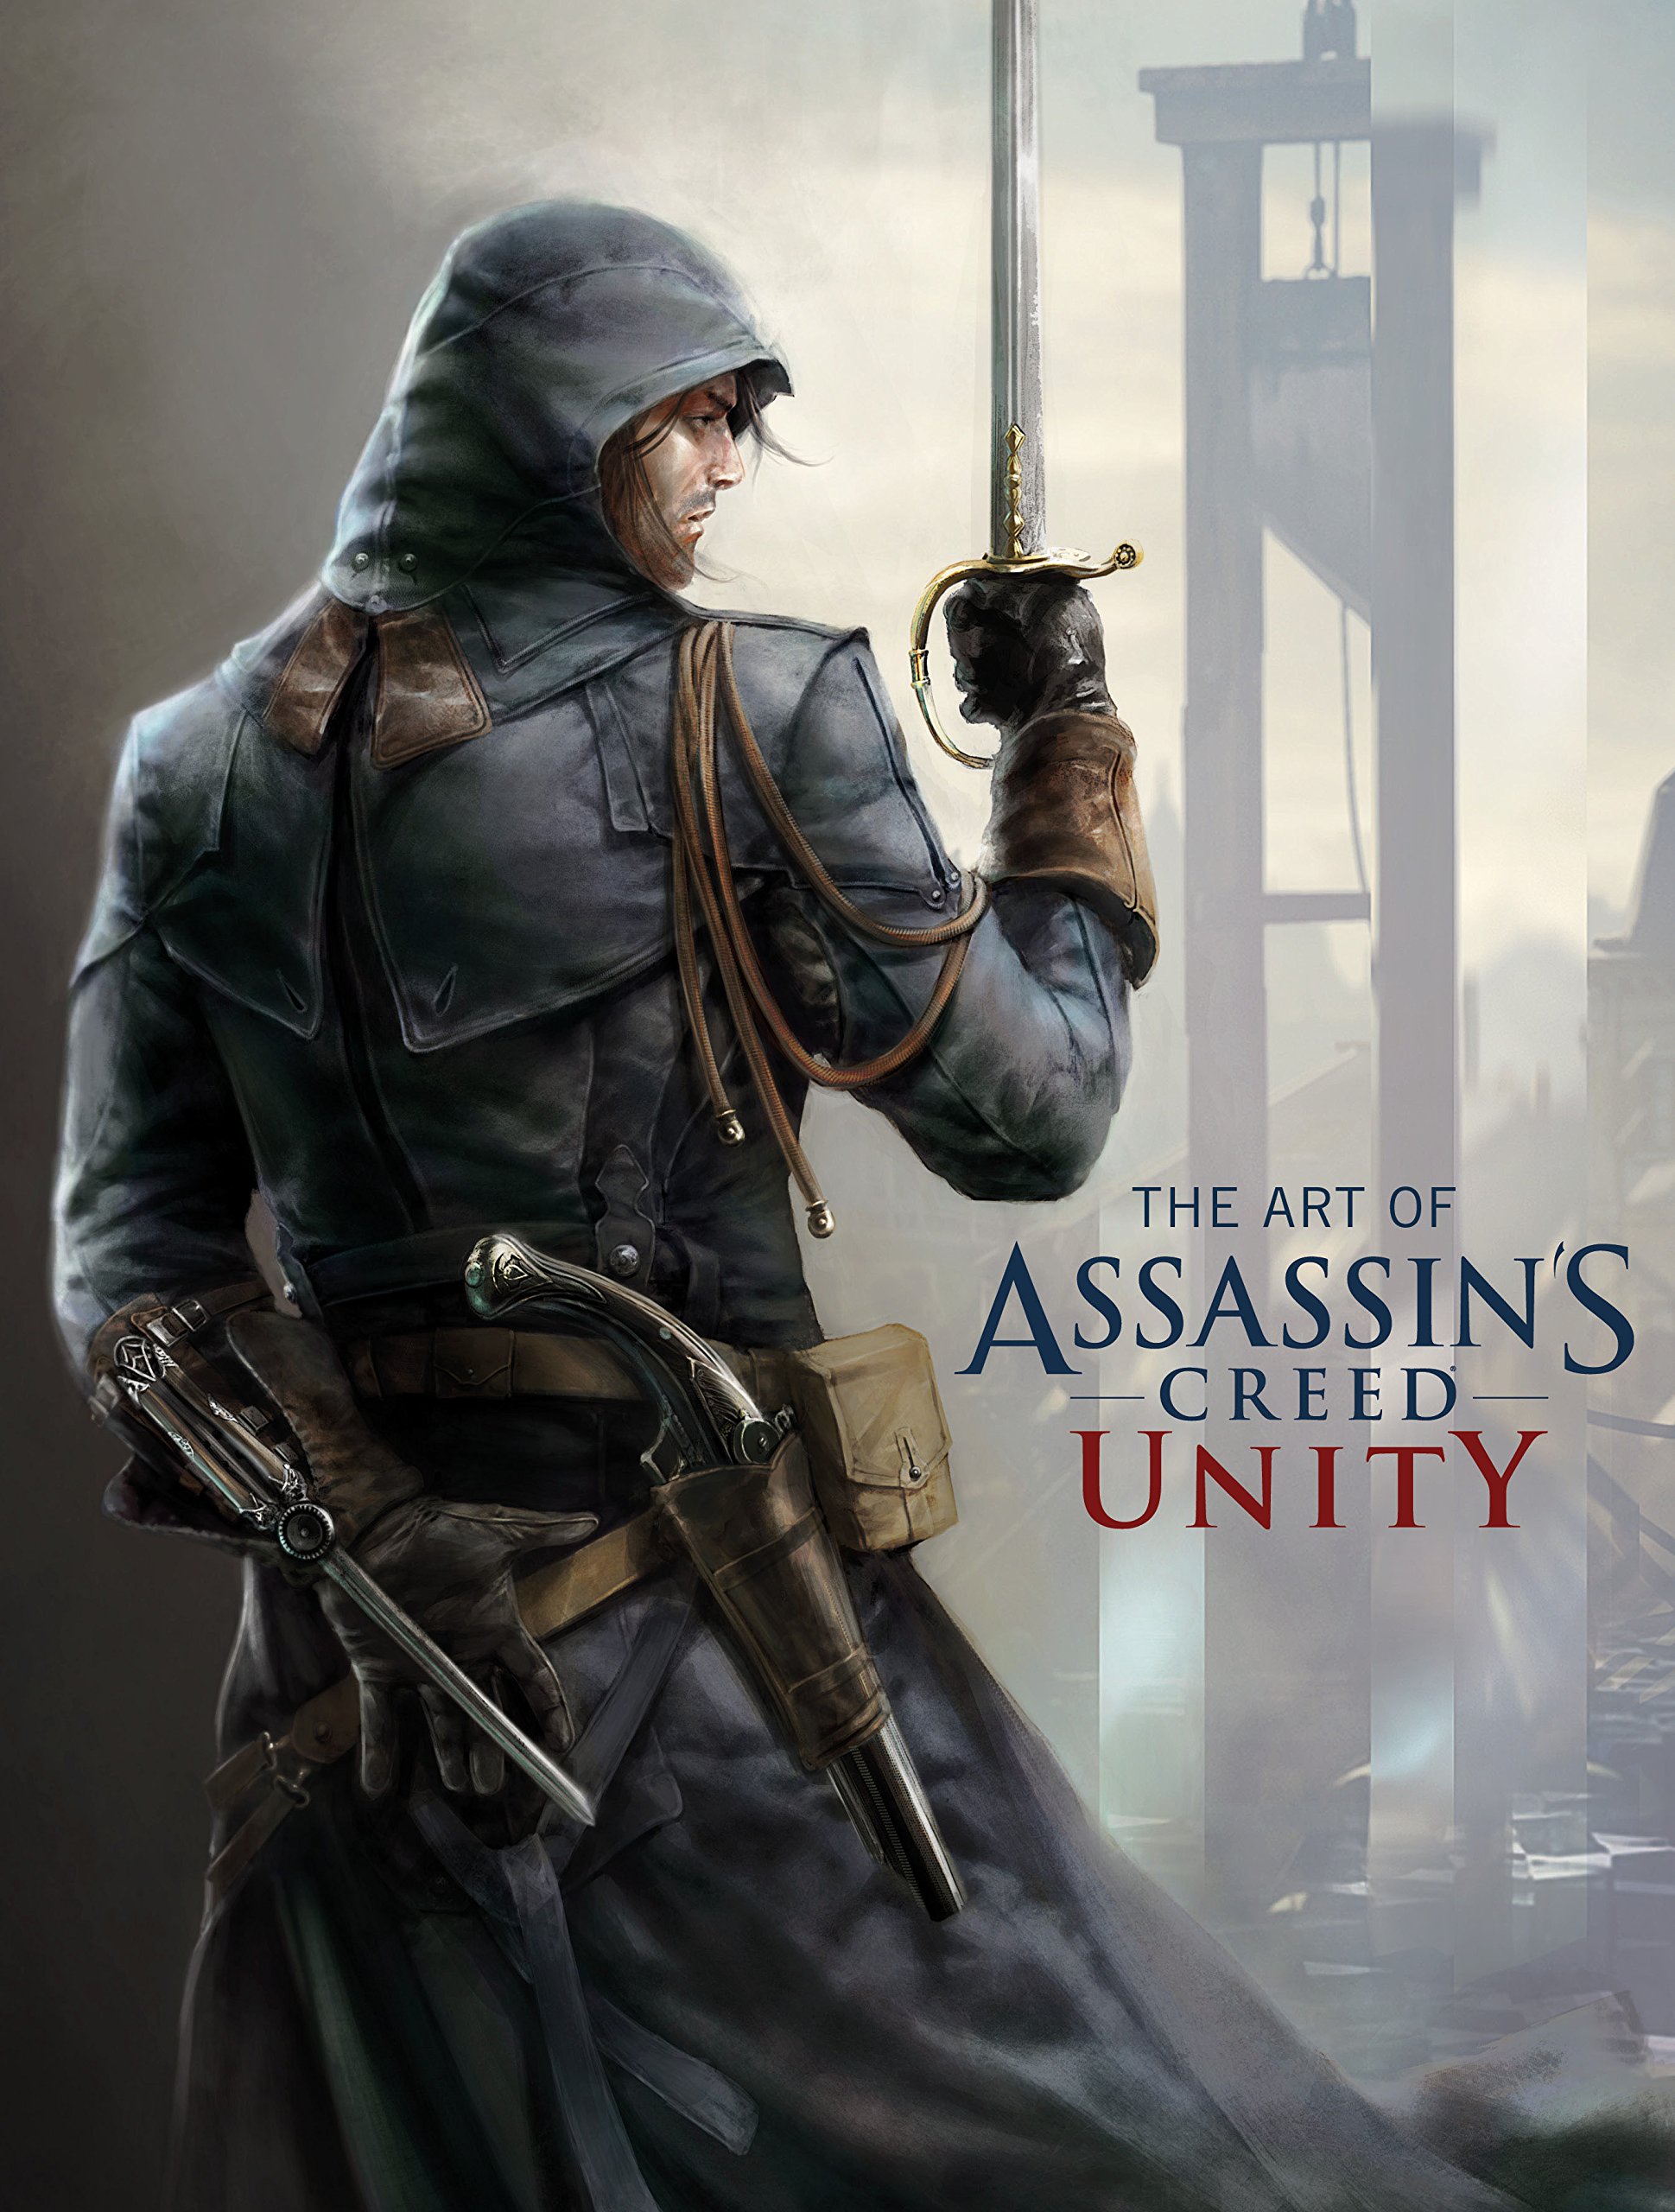 The Art of Assassin's Unity | Creed Wiki | Fandom